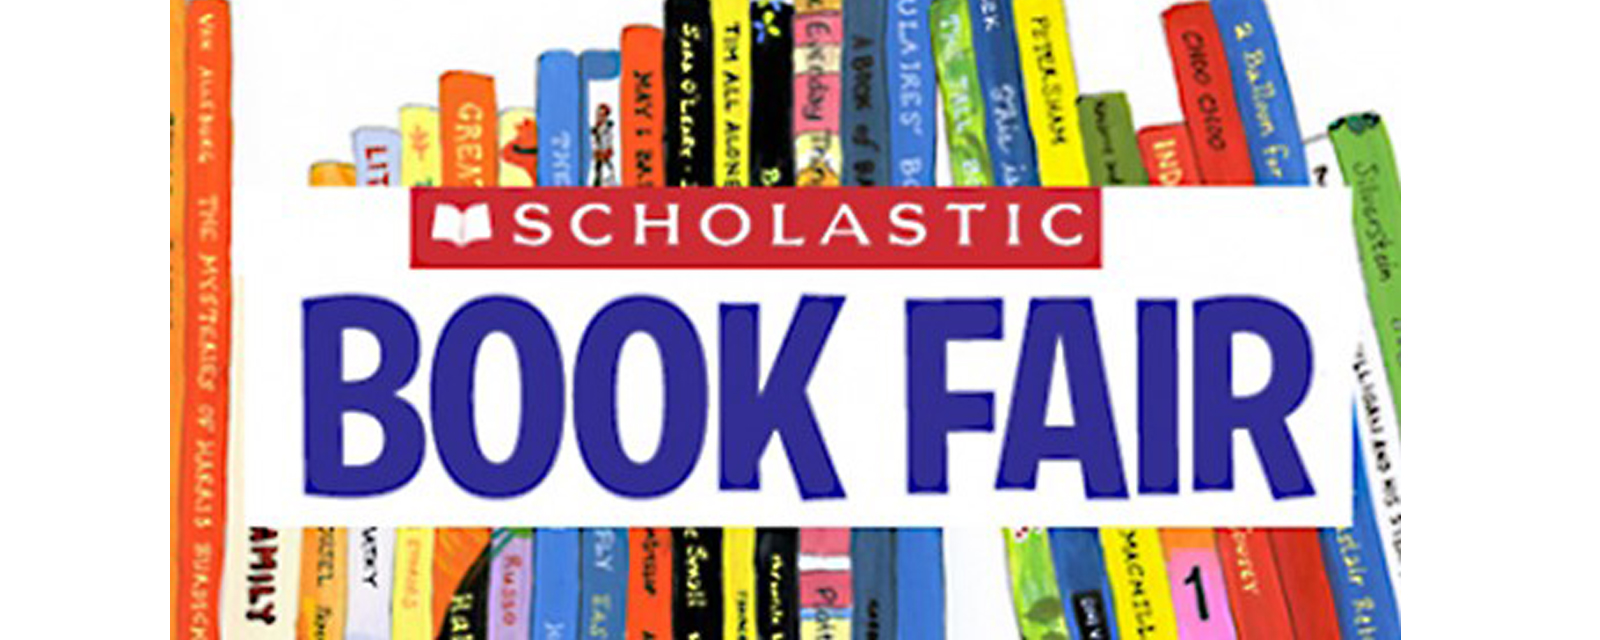 Scholastic Book Fair  Reynolds School District - Oregon